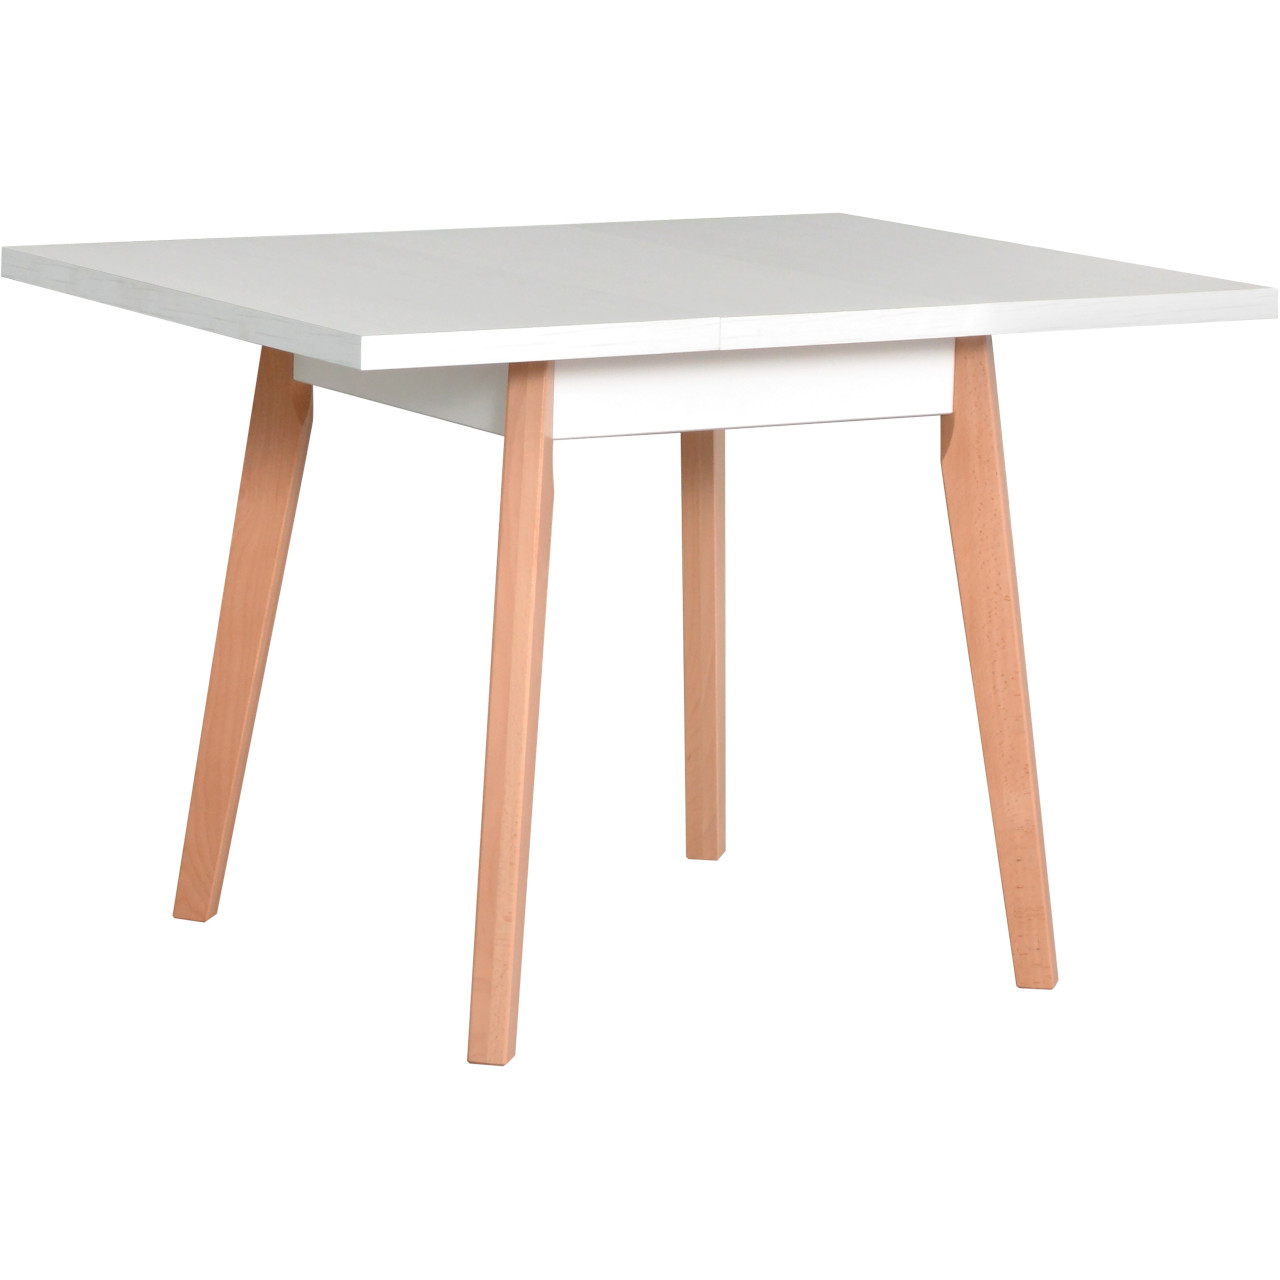 Table OSLO 1 L 80x80/110 white laminate / natural beech